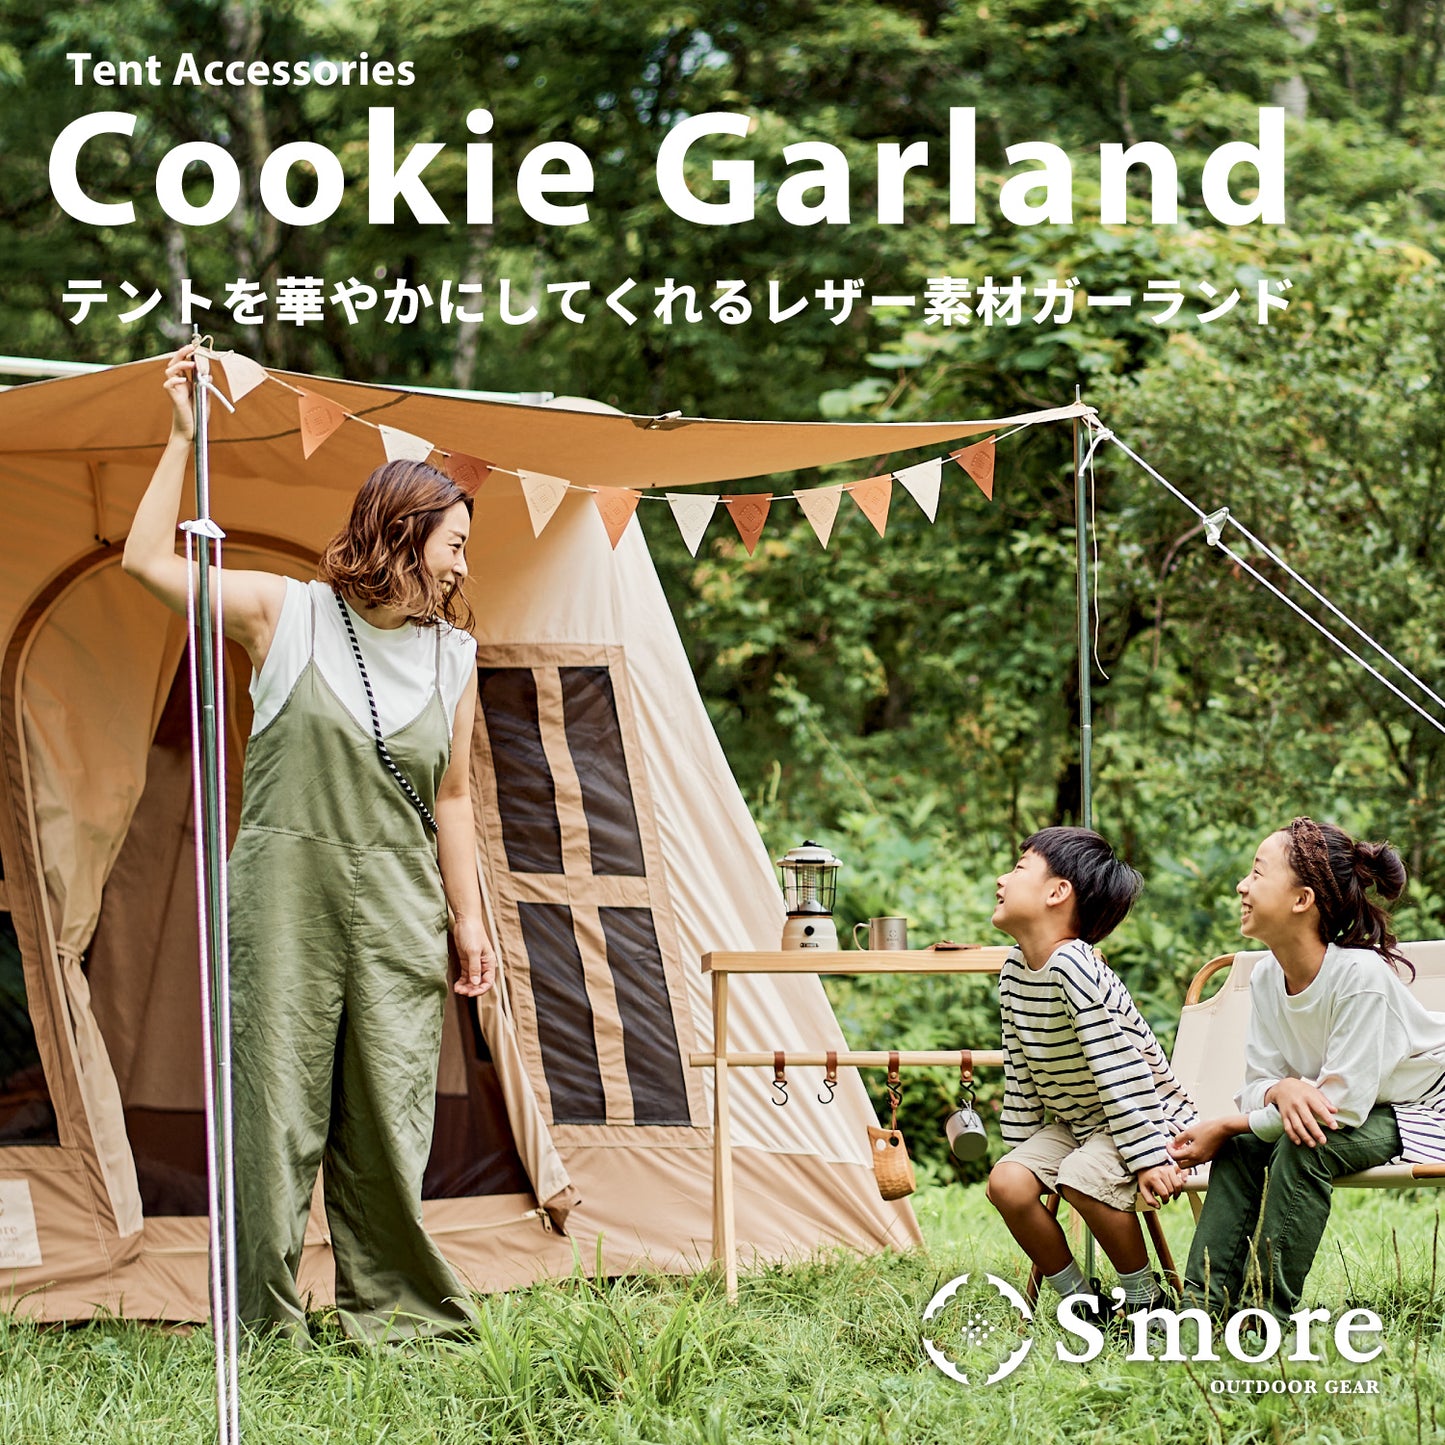 【 Cookie Garland 】 クッキーガーランド S'moreロゴ印字の合皮素材ガーランド